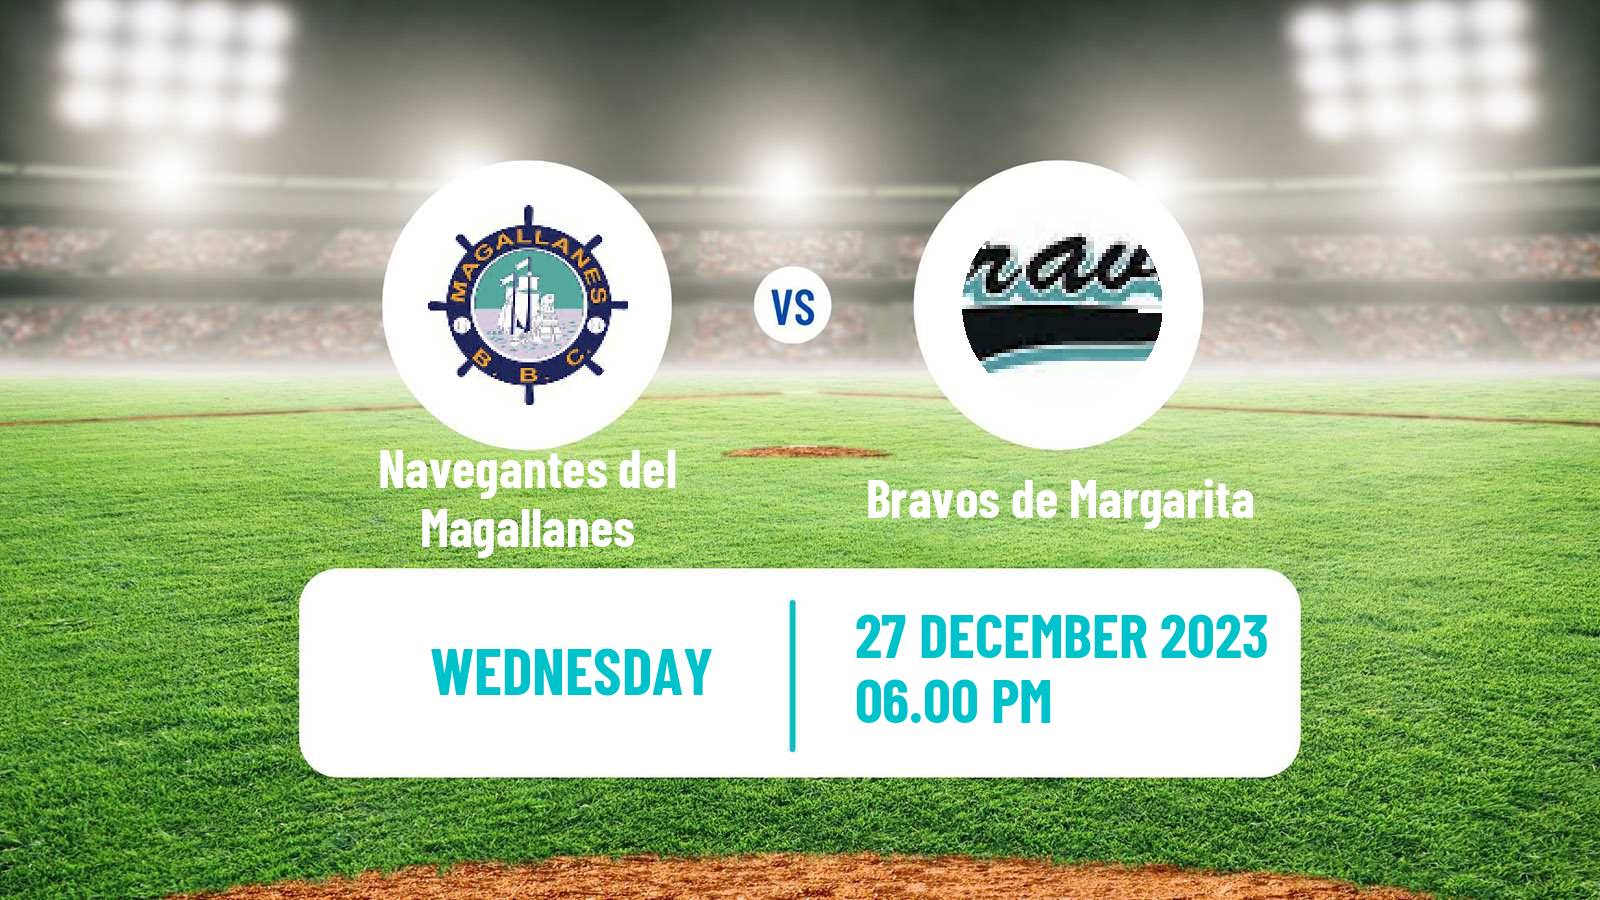 Baseball Venezuelan LVBP Navegantes del Magallanes - Bravos de Margarita